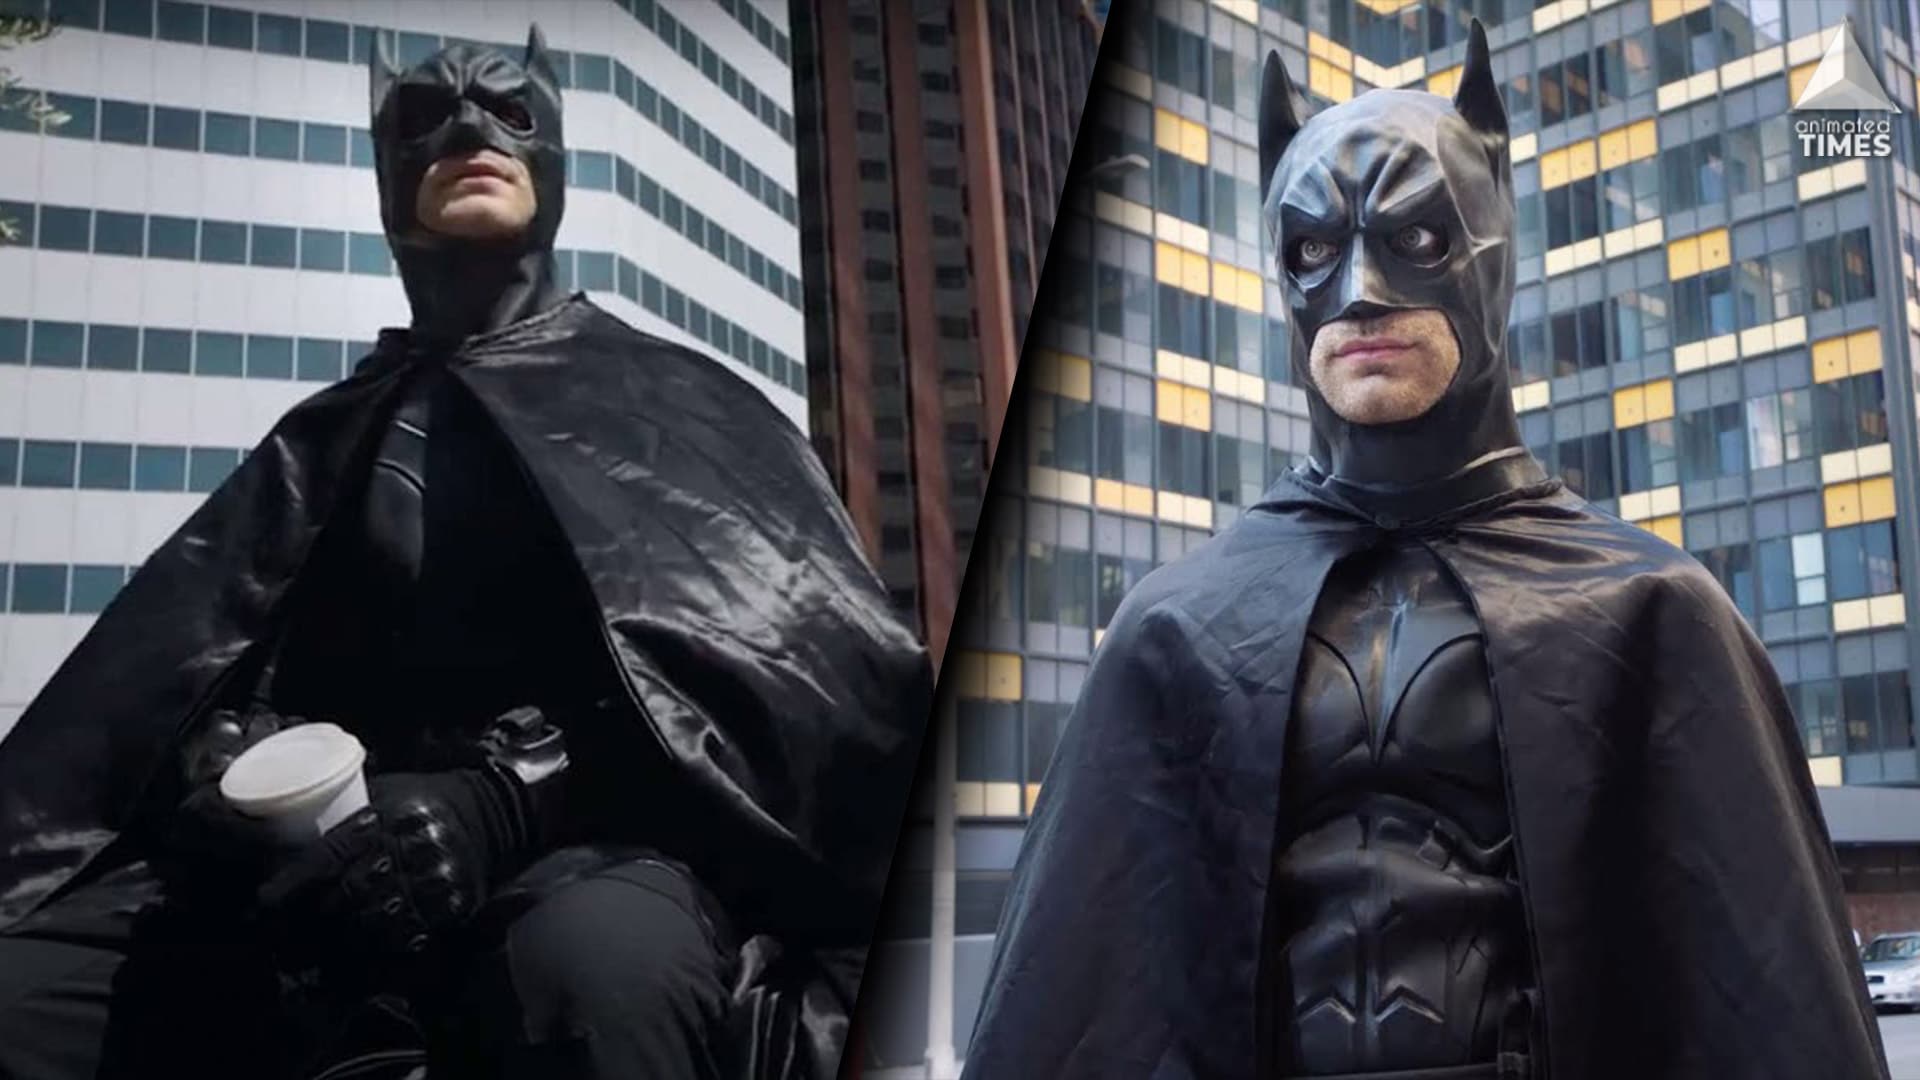 Marvel’s Agent of Shield Cast Shoots Batman Parody For Charity.